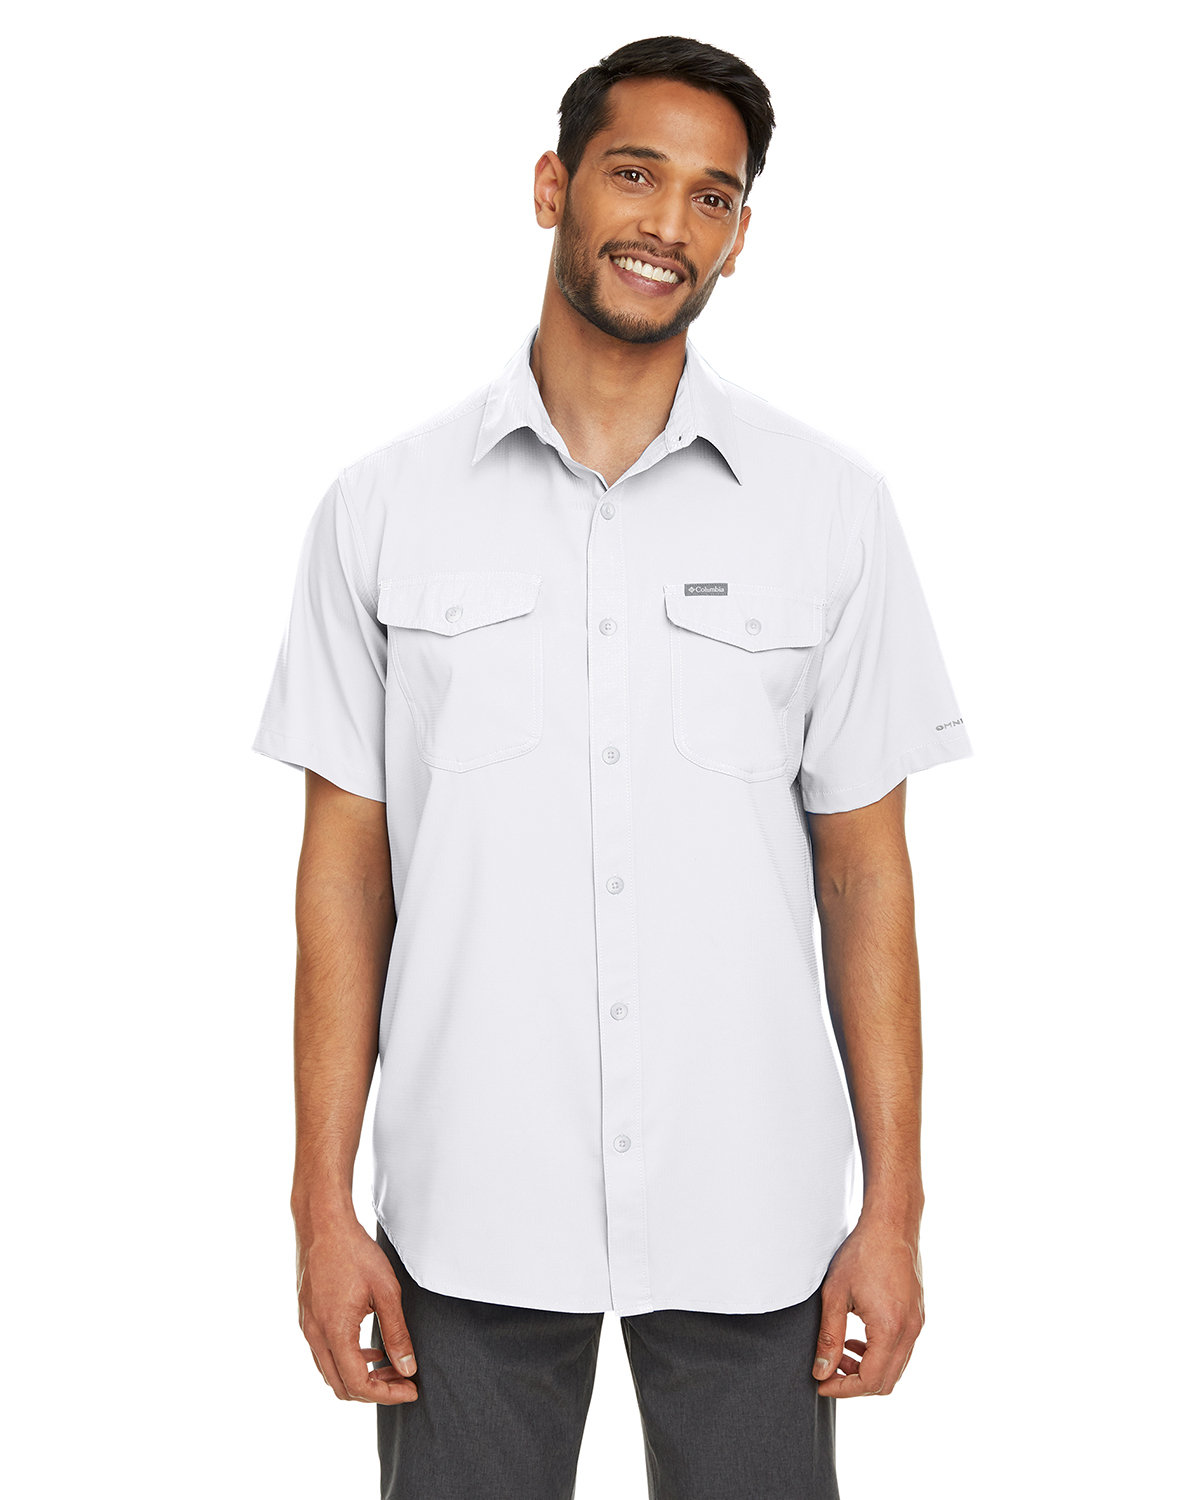 Heat Holders - Mens Grey White Cotton Thermal Underwear Short Sleeve Vest  Top